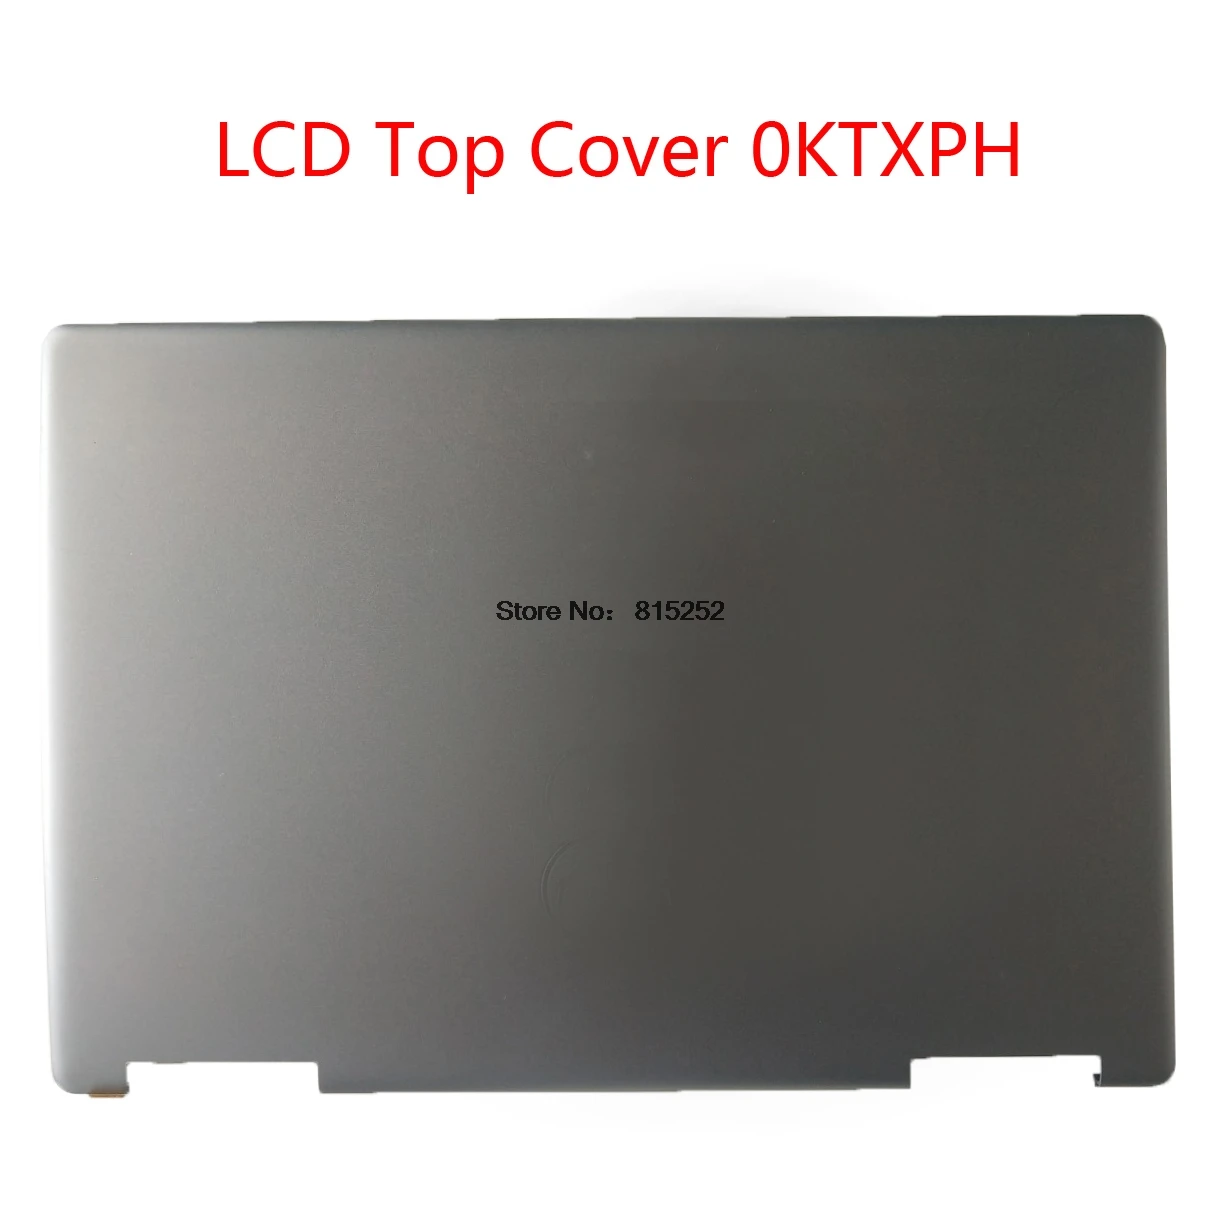 GAOCHENG Laptop LCD Top Cover for DELL Inspiron 13 7370 7373 P83G 0KTXPH KTXPH Gray Back Cover New